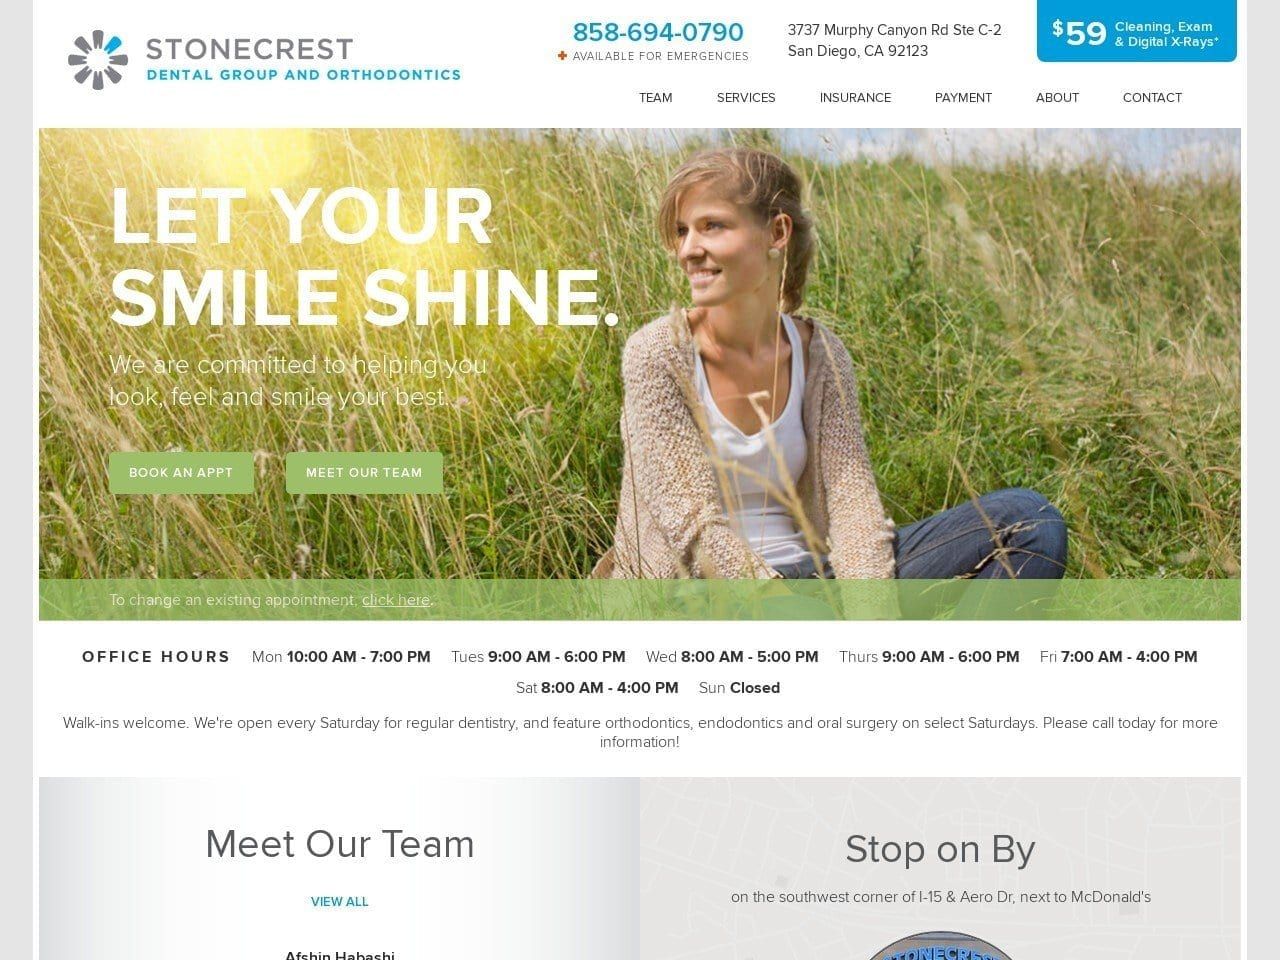 Stonecrest Dental Group and Orthodontics Website Screenshot from stonecrestdentalgroup.com